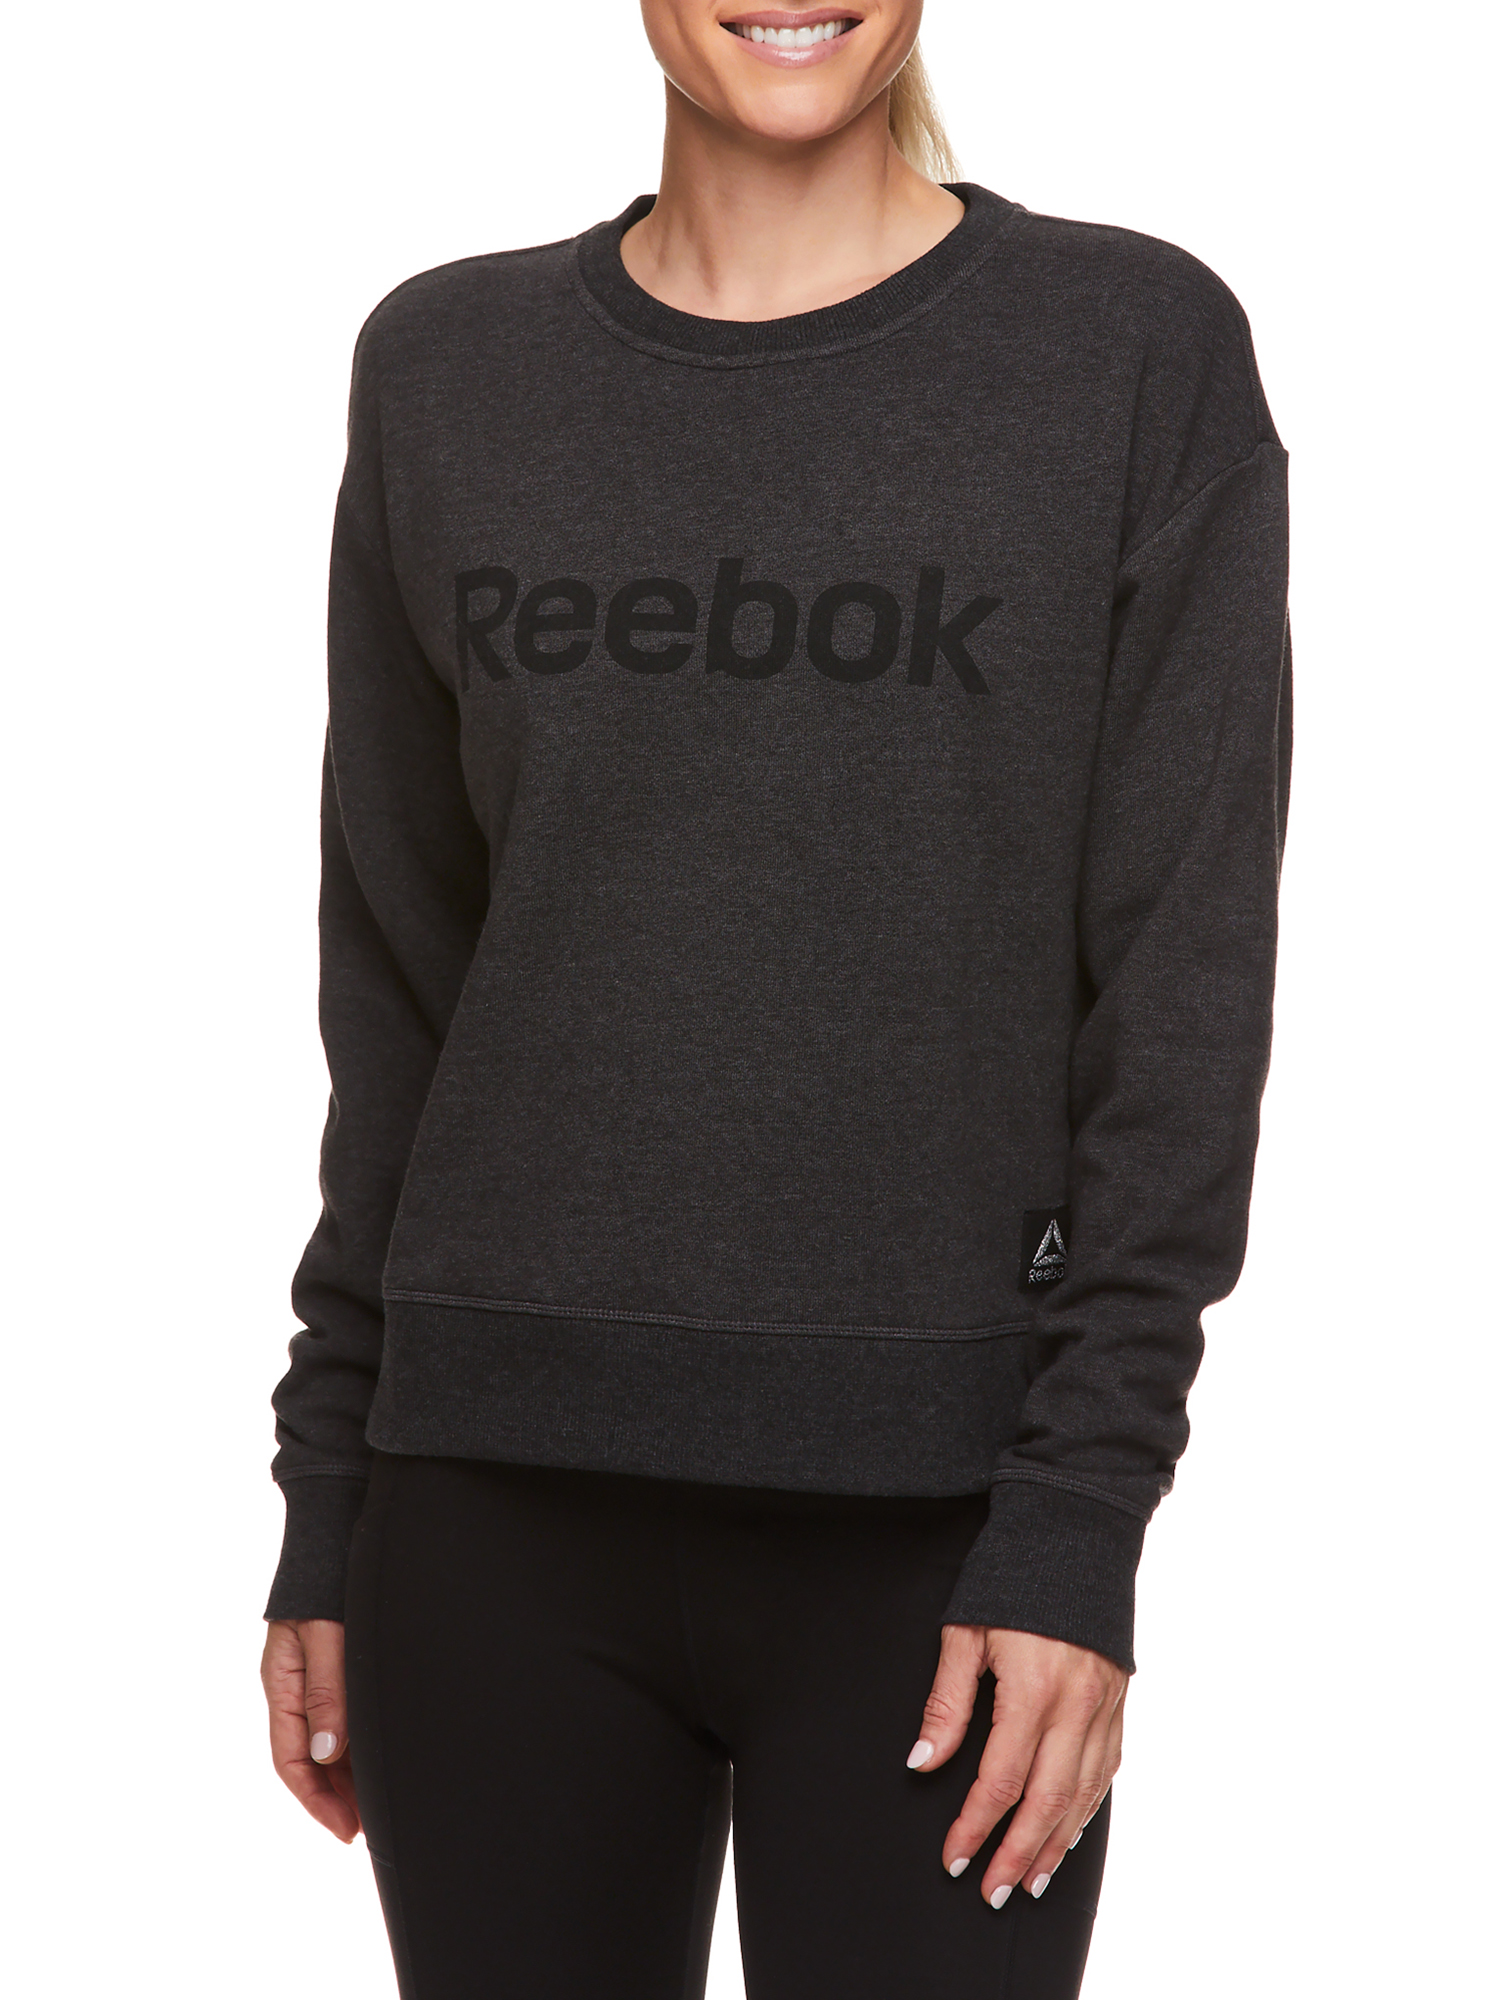 Reebok Women's Plus Size Cozy Crewneck Sweater with Graphic - image 2 of 4